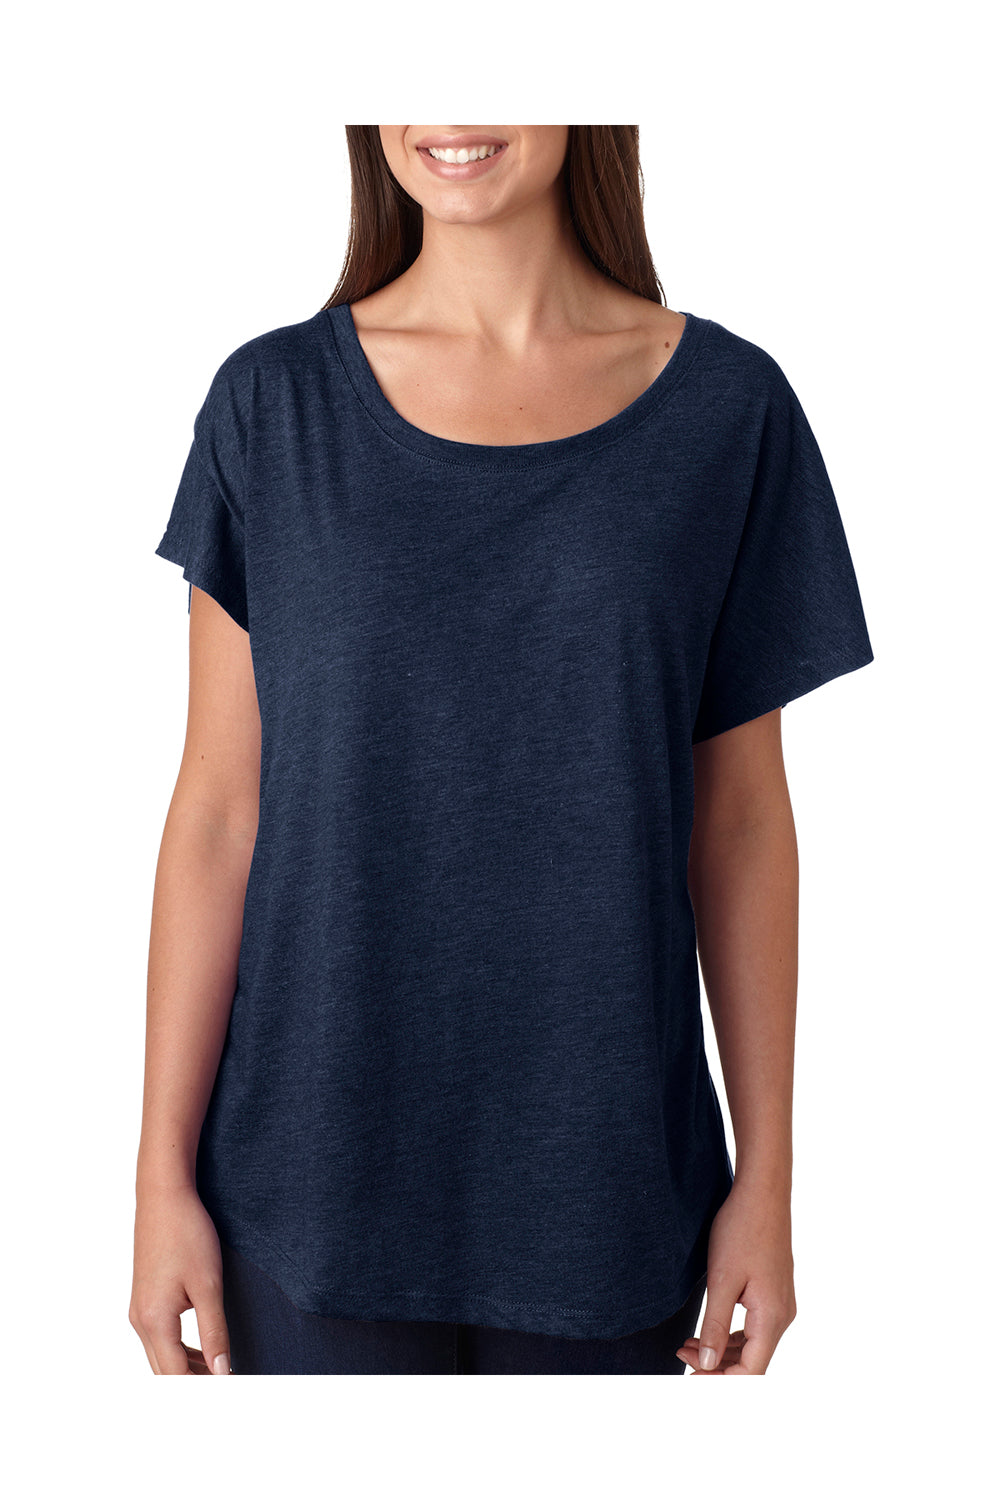 Next Level 6760 Womens Dolman Jersey Short Sleeve Scoop Neck T-Shirt Navy Blue Front